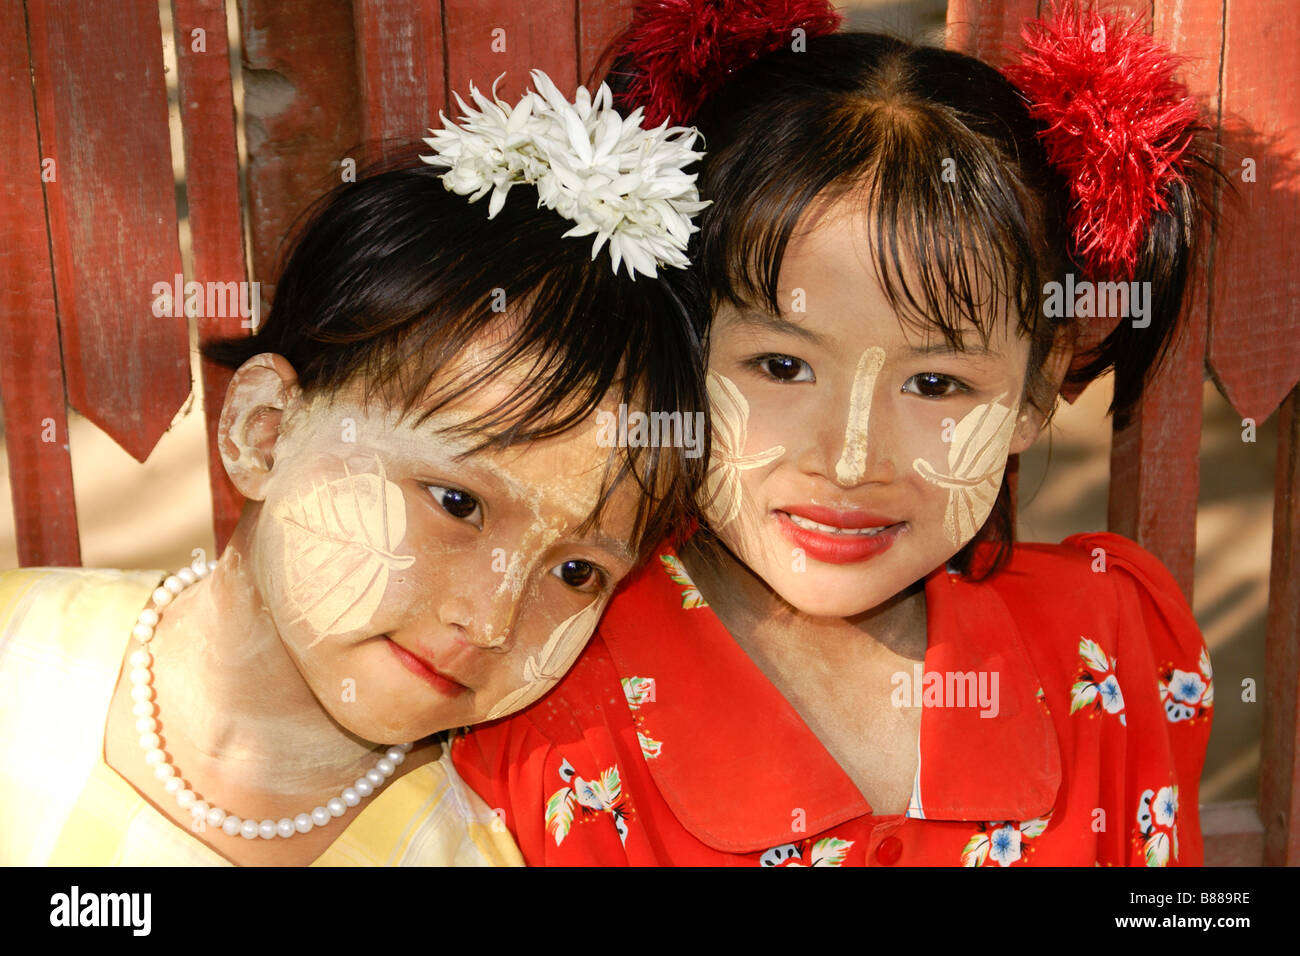 Young girls with thanaka on face, Mandalay, Myanmar (Burma) Stock Photo